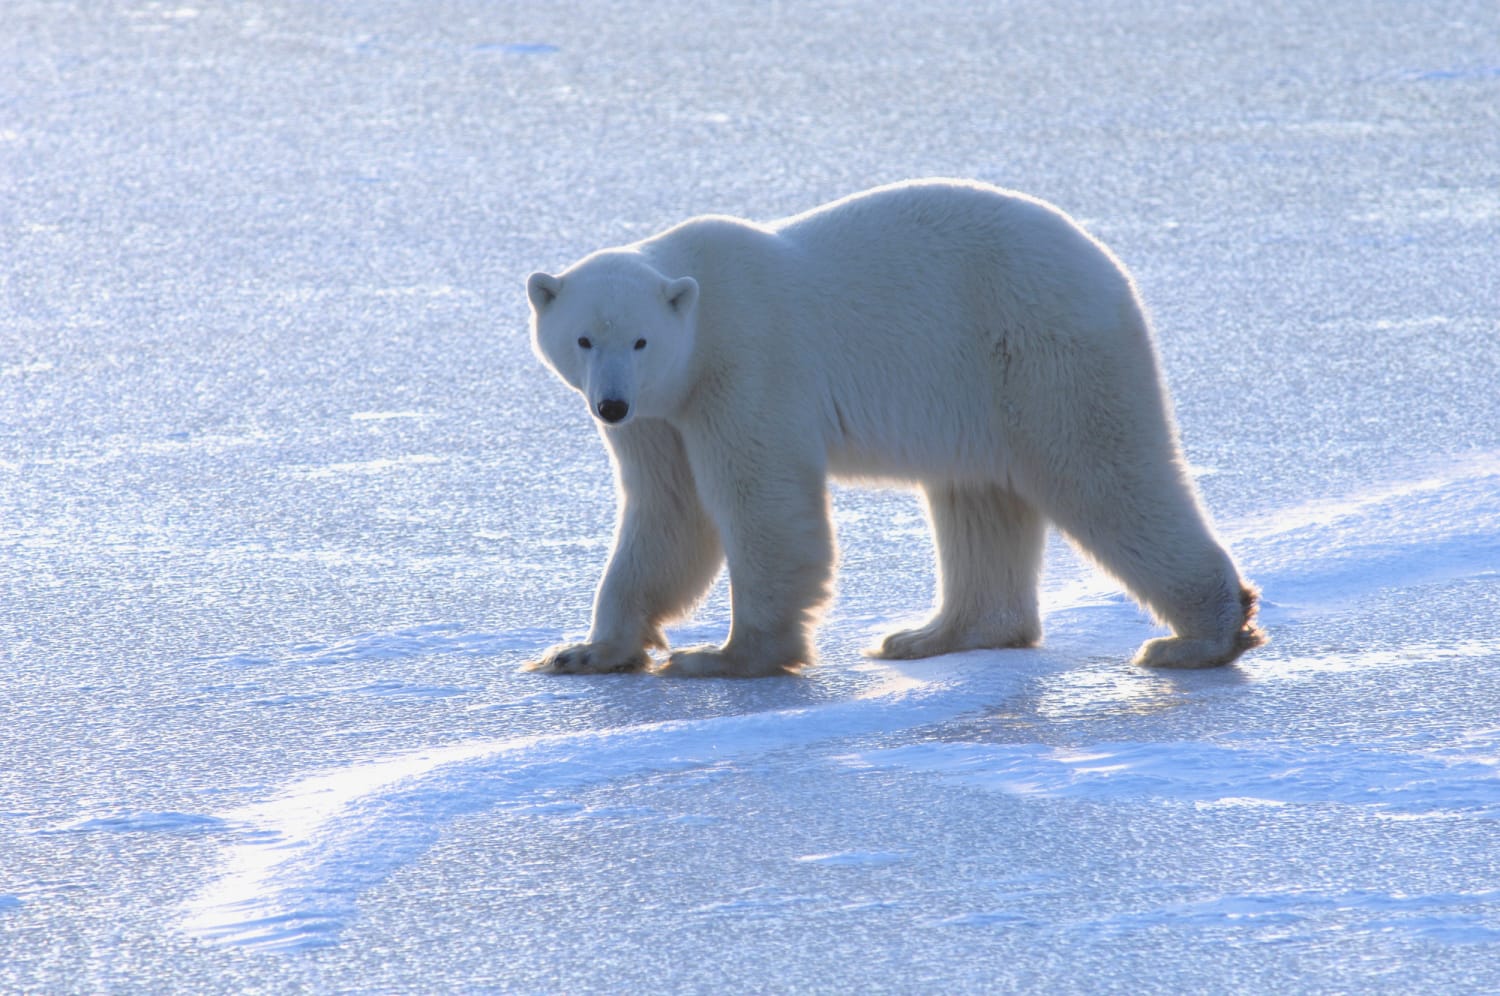 Scientists hatch bold plan to save polar bears